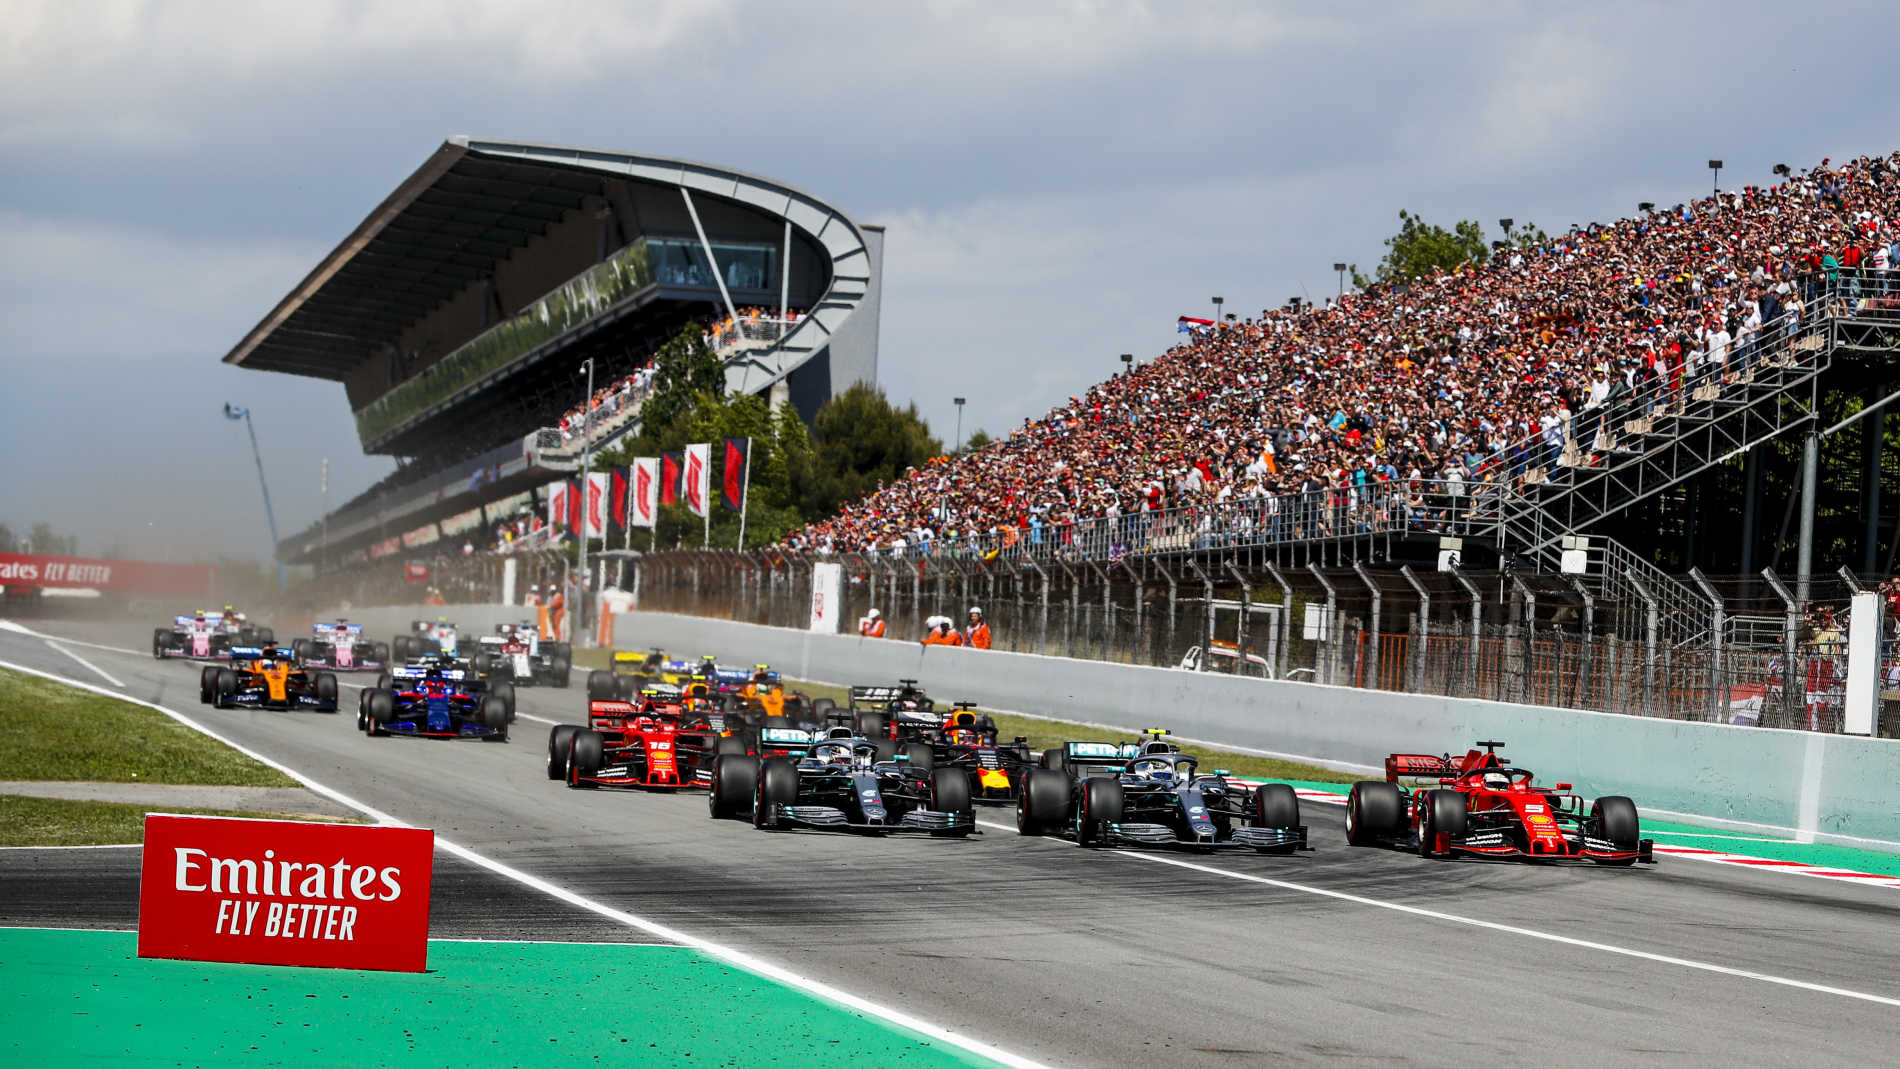 F1s racing restart